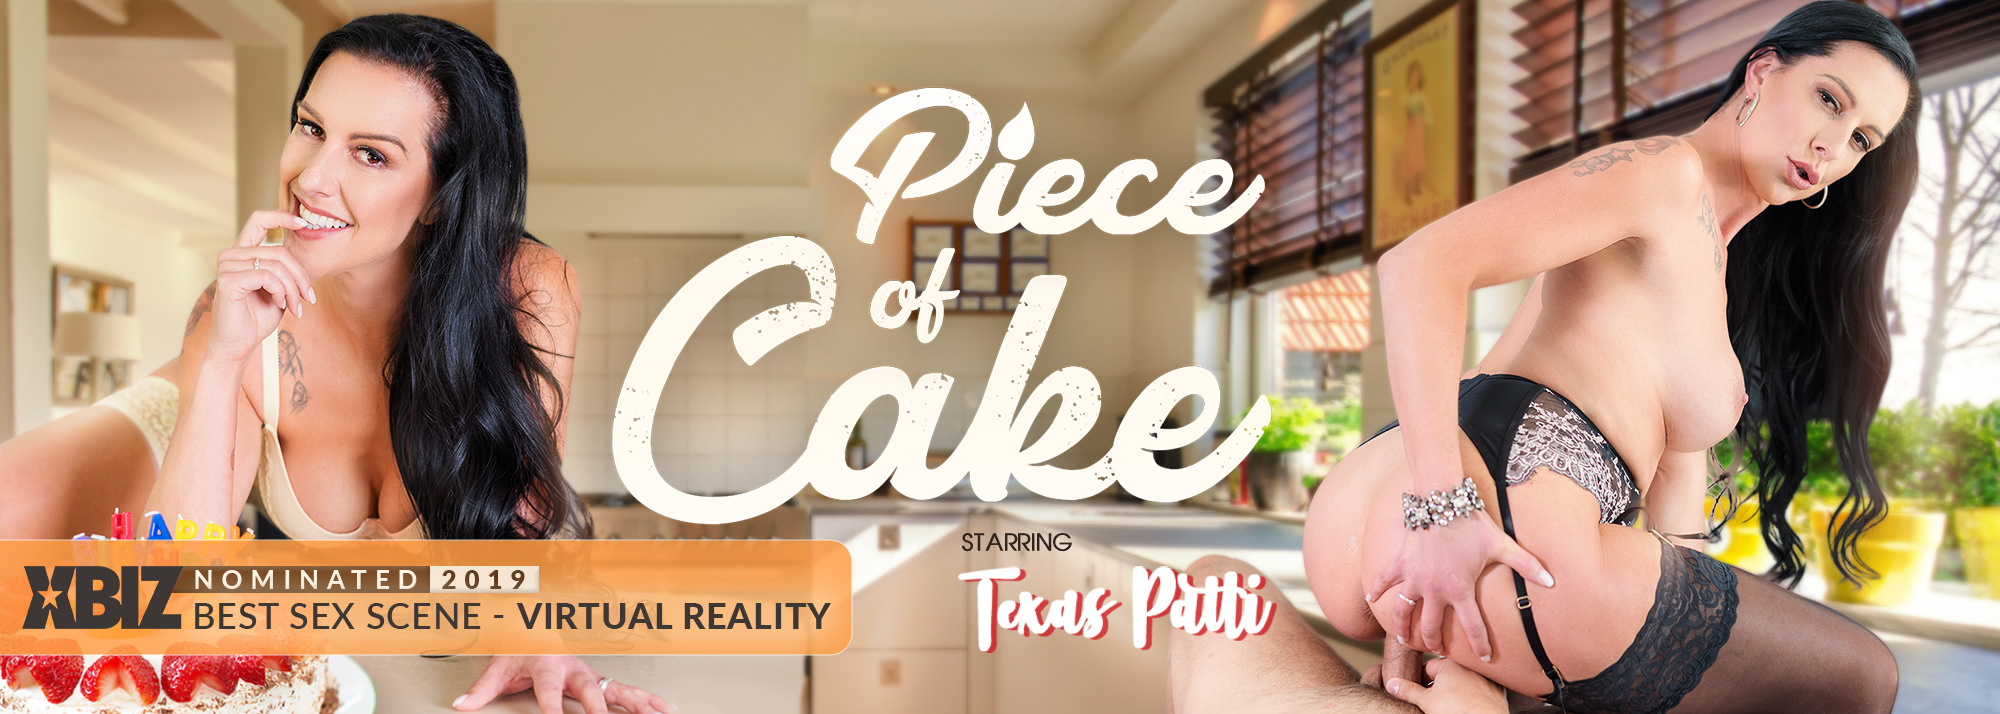 Piece of Cake - VR Porn Video, Starring: Texas Patti